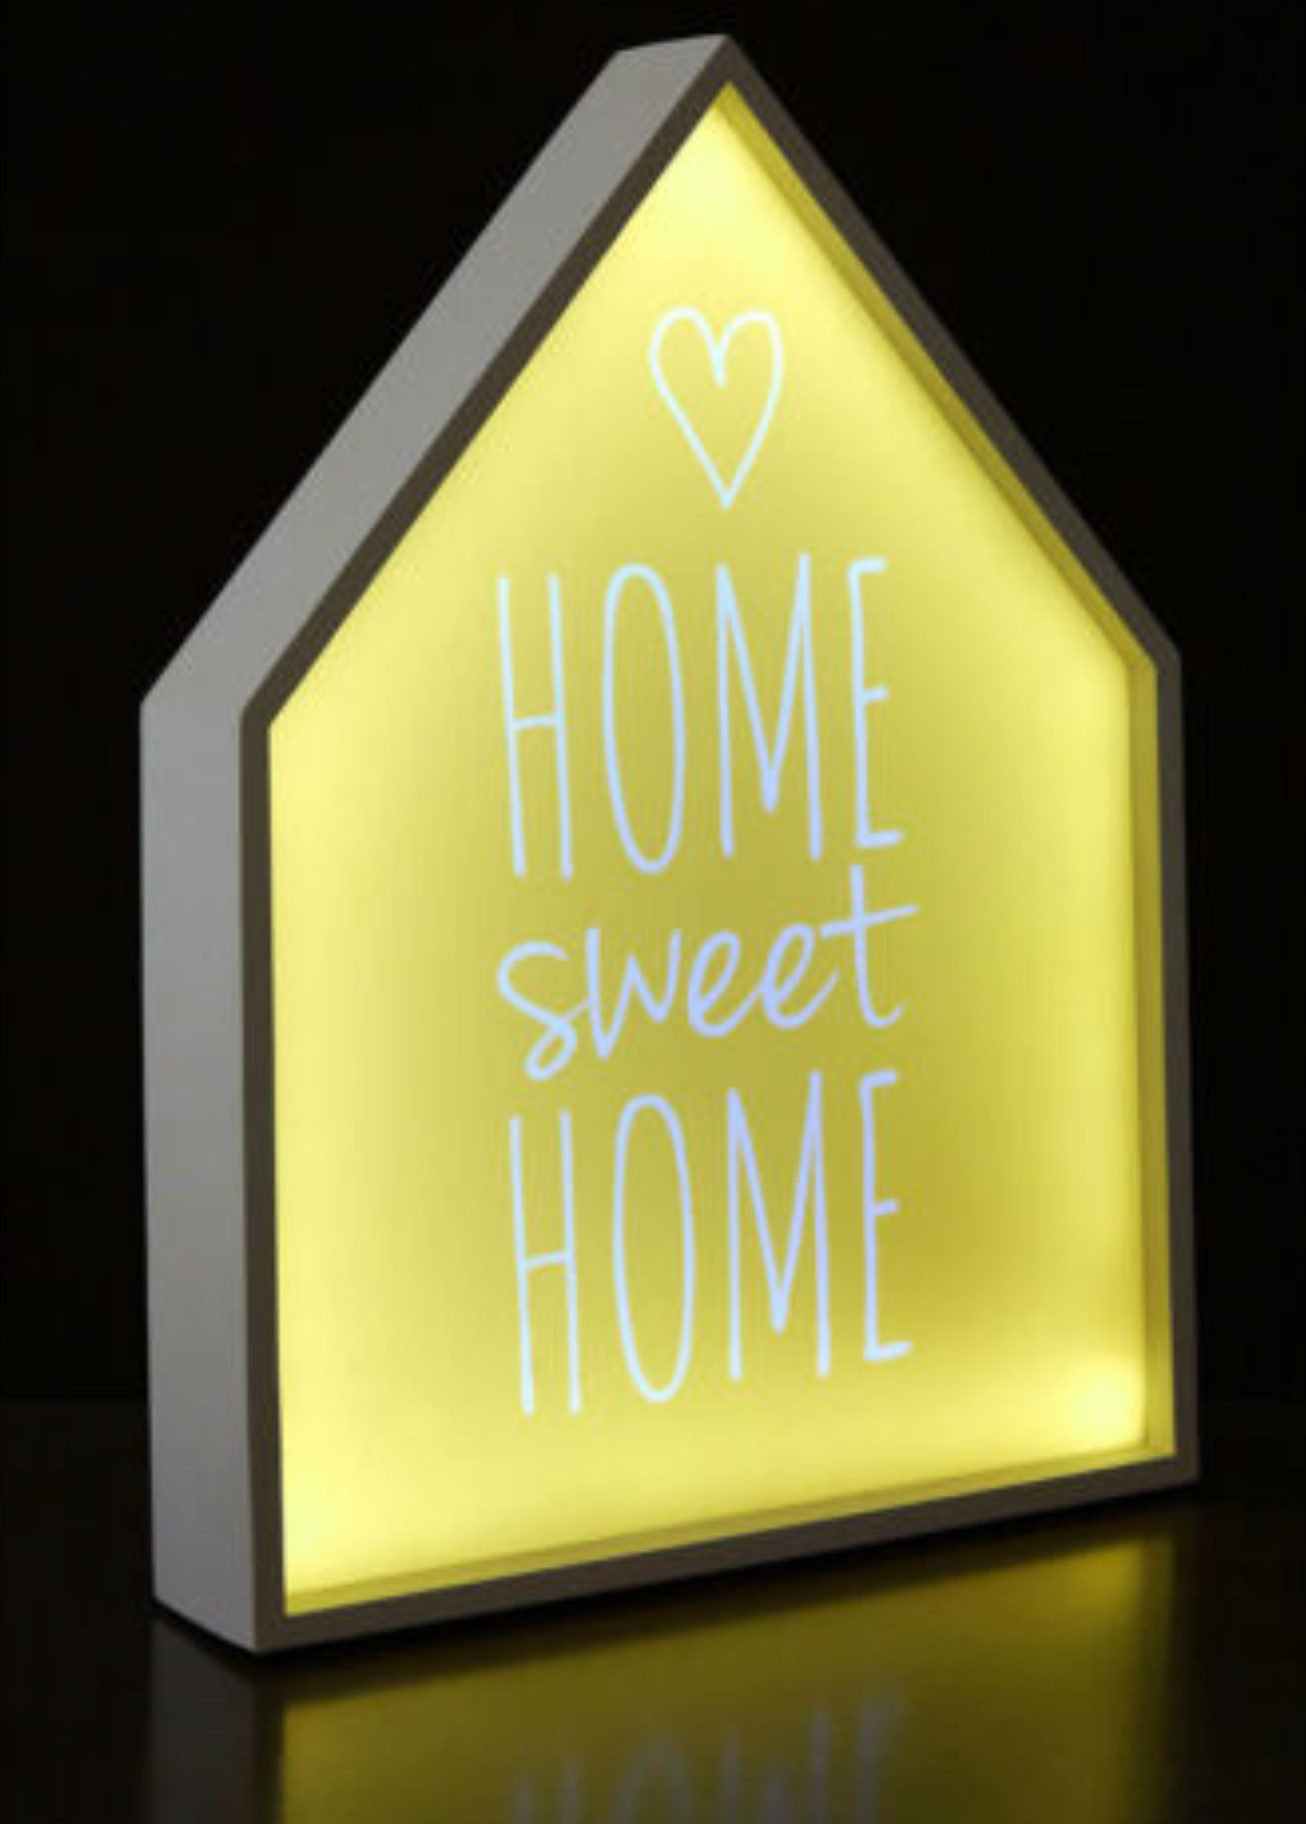 Home Sweet Home Led Light Box